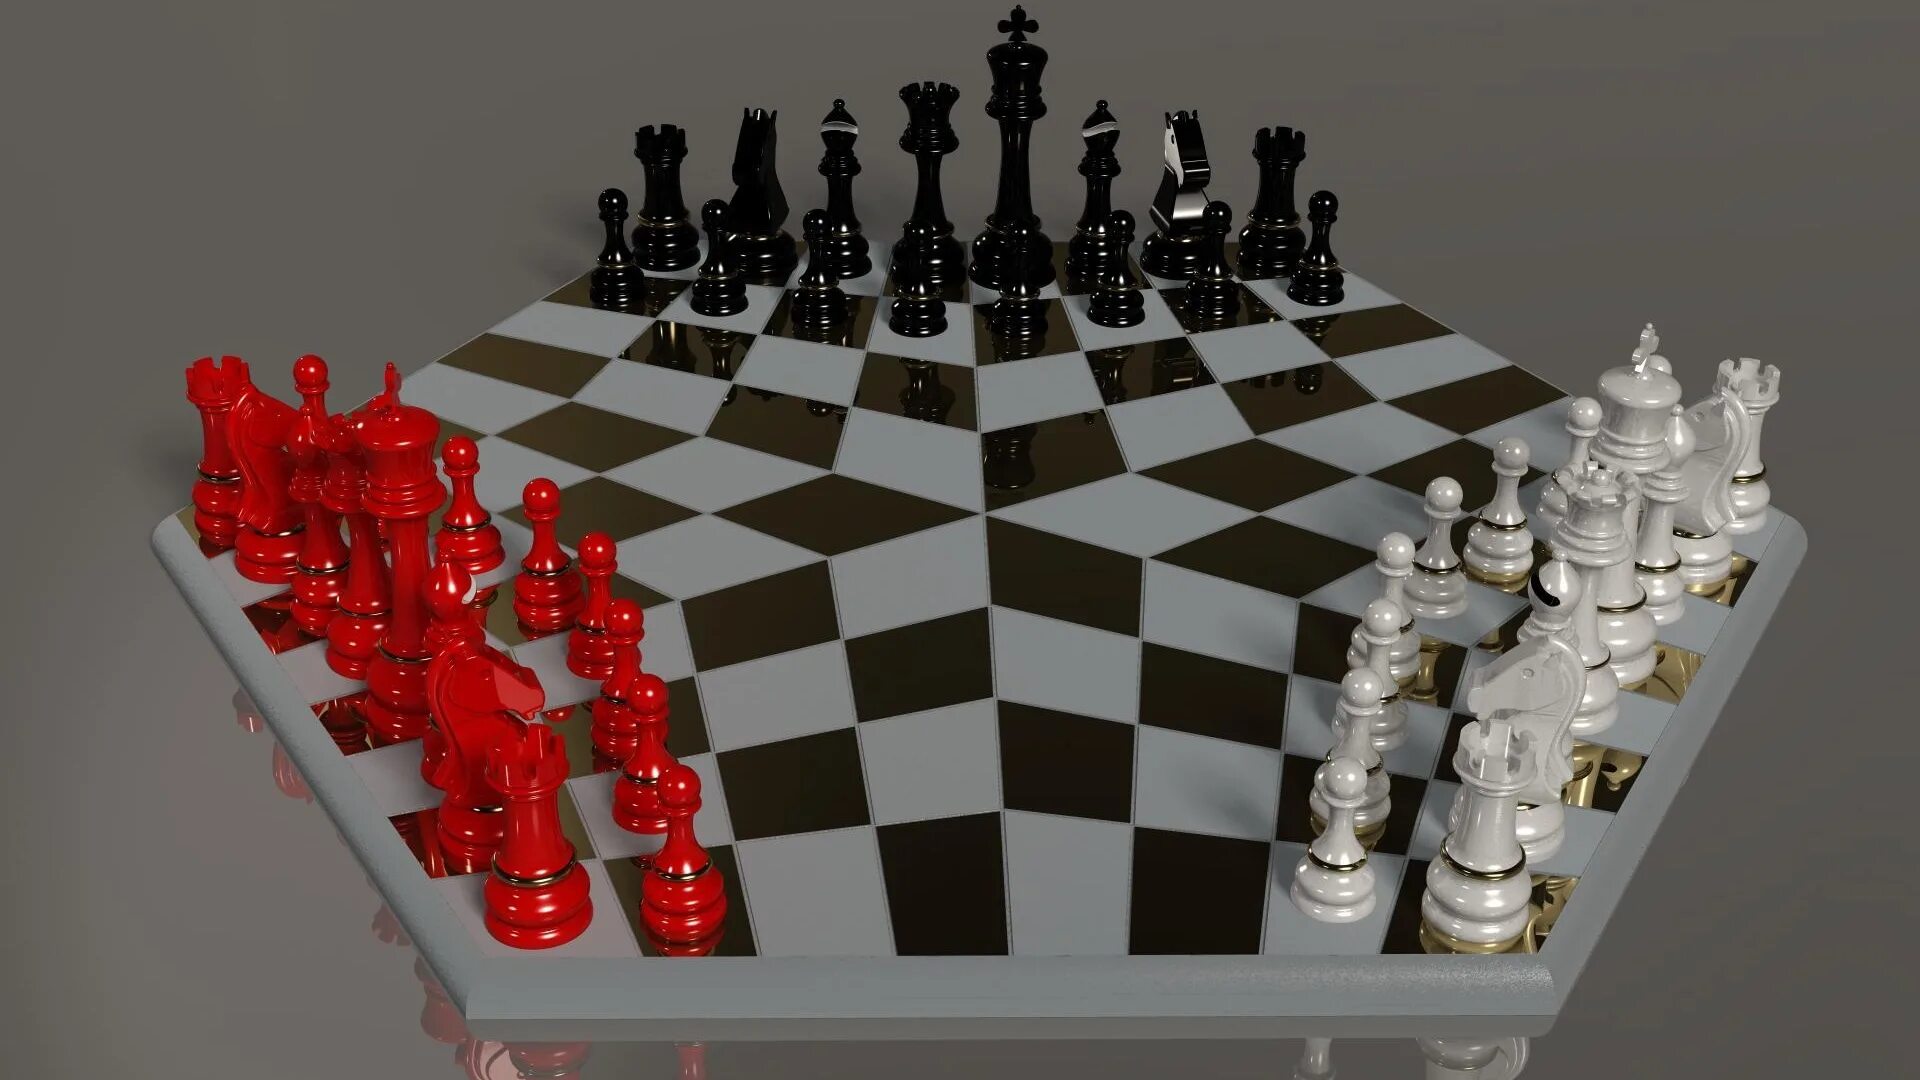 На шахматной доске 5 белых фигур. Девятерные шахматы Прокофьева. Пятимерные шахматы. Шахматная доска. Красивые шахматные фигуры.